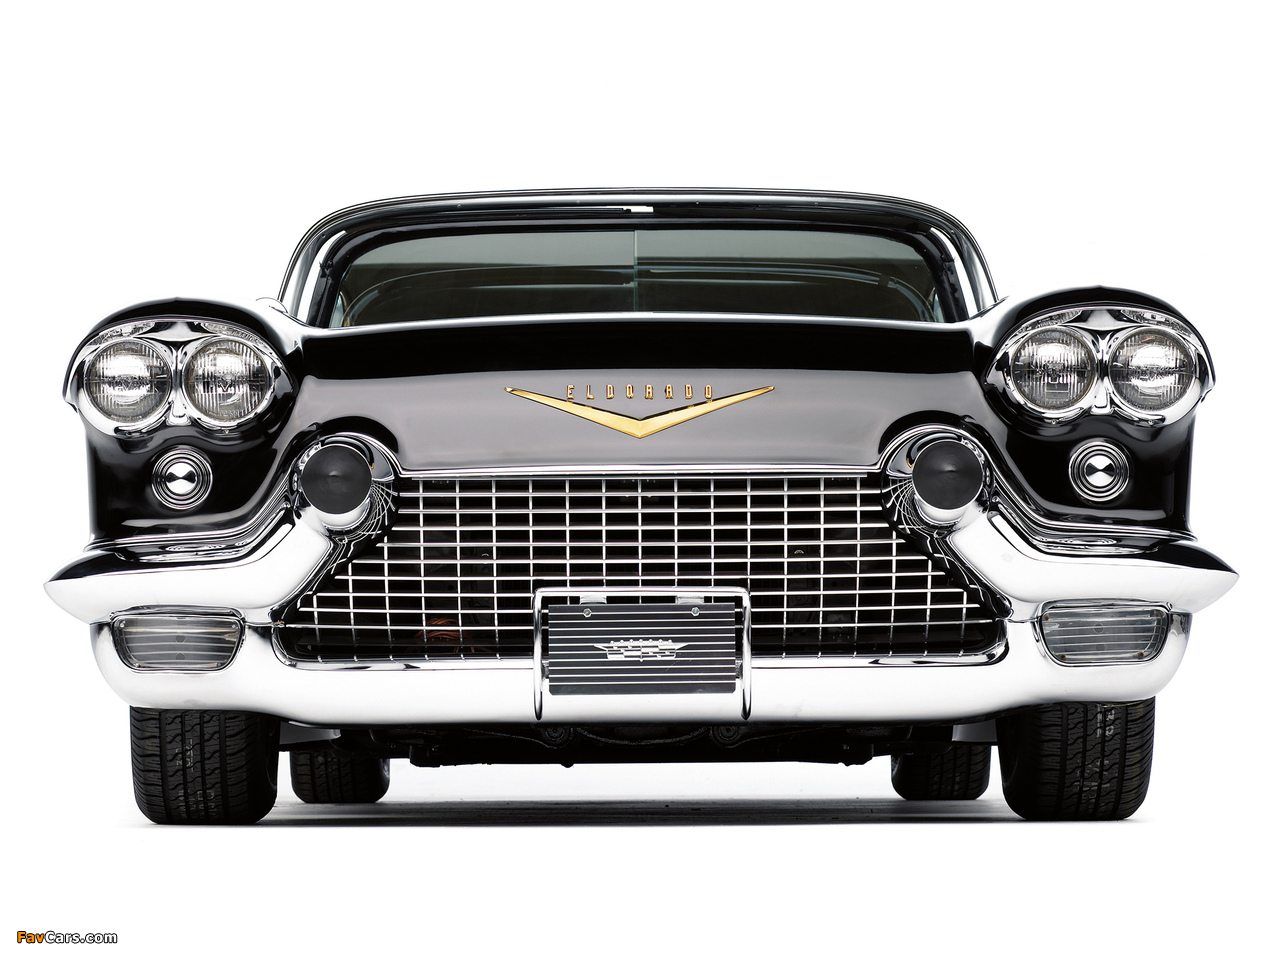 Images of Cadillac Eldorado Brougham Town Car Show Car 1956 (1280 x 960)